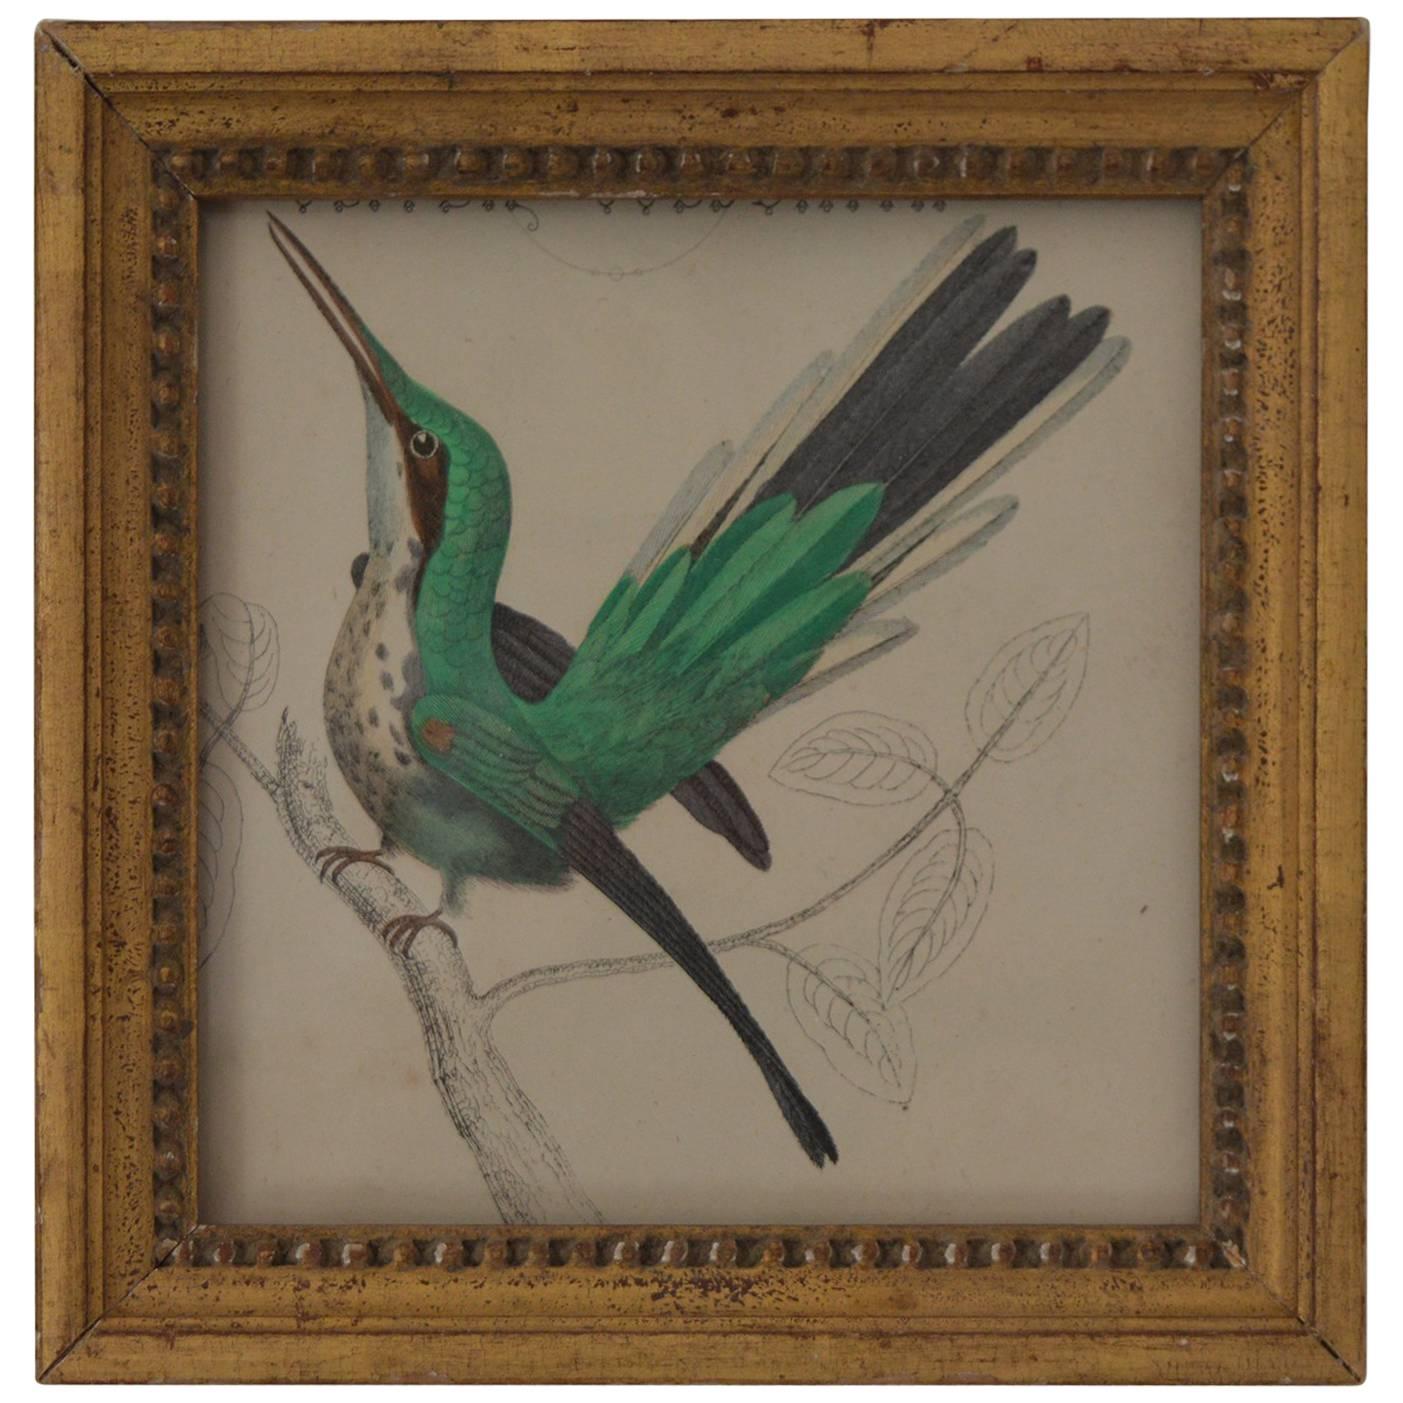 Original Antique Print of a Hummingbird, 1847